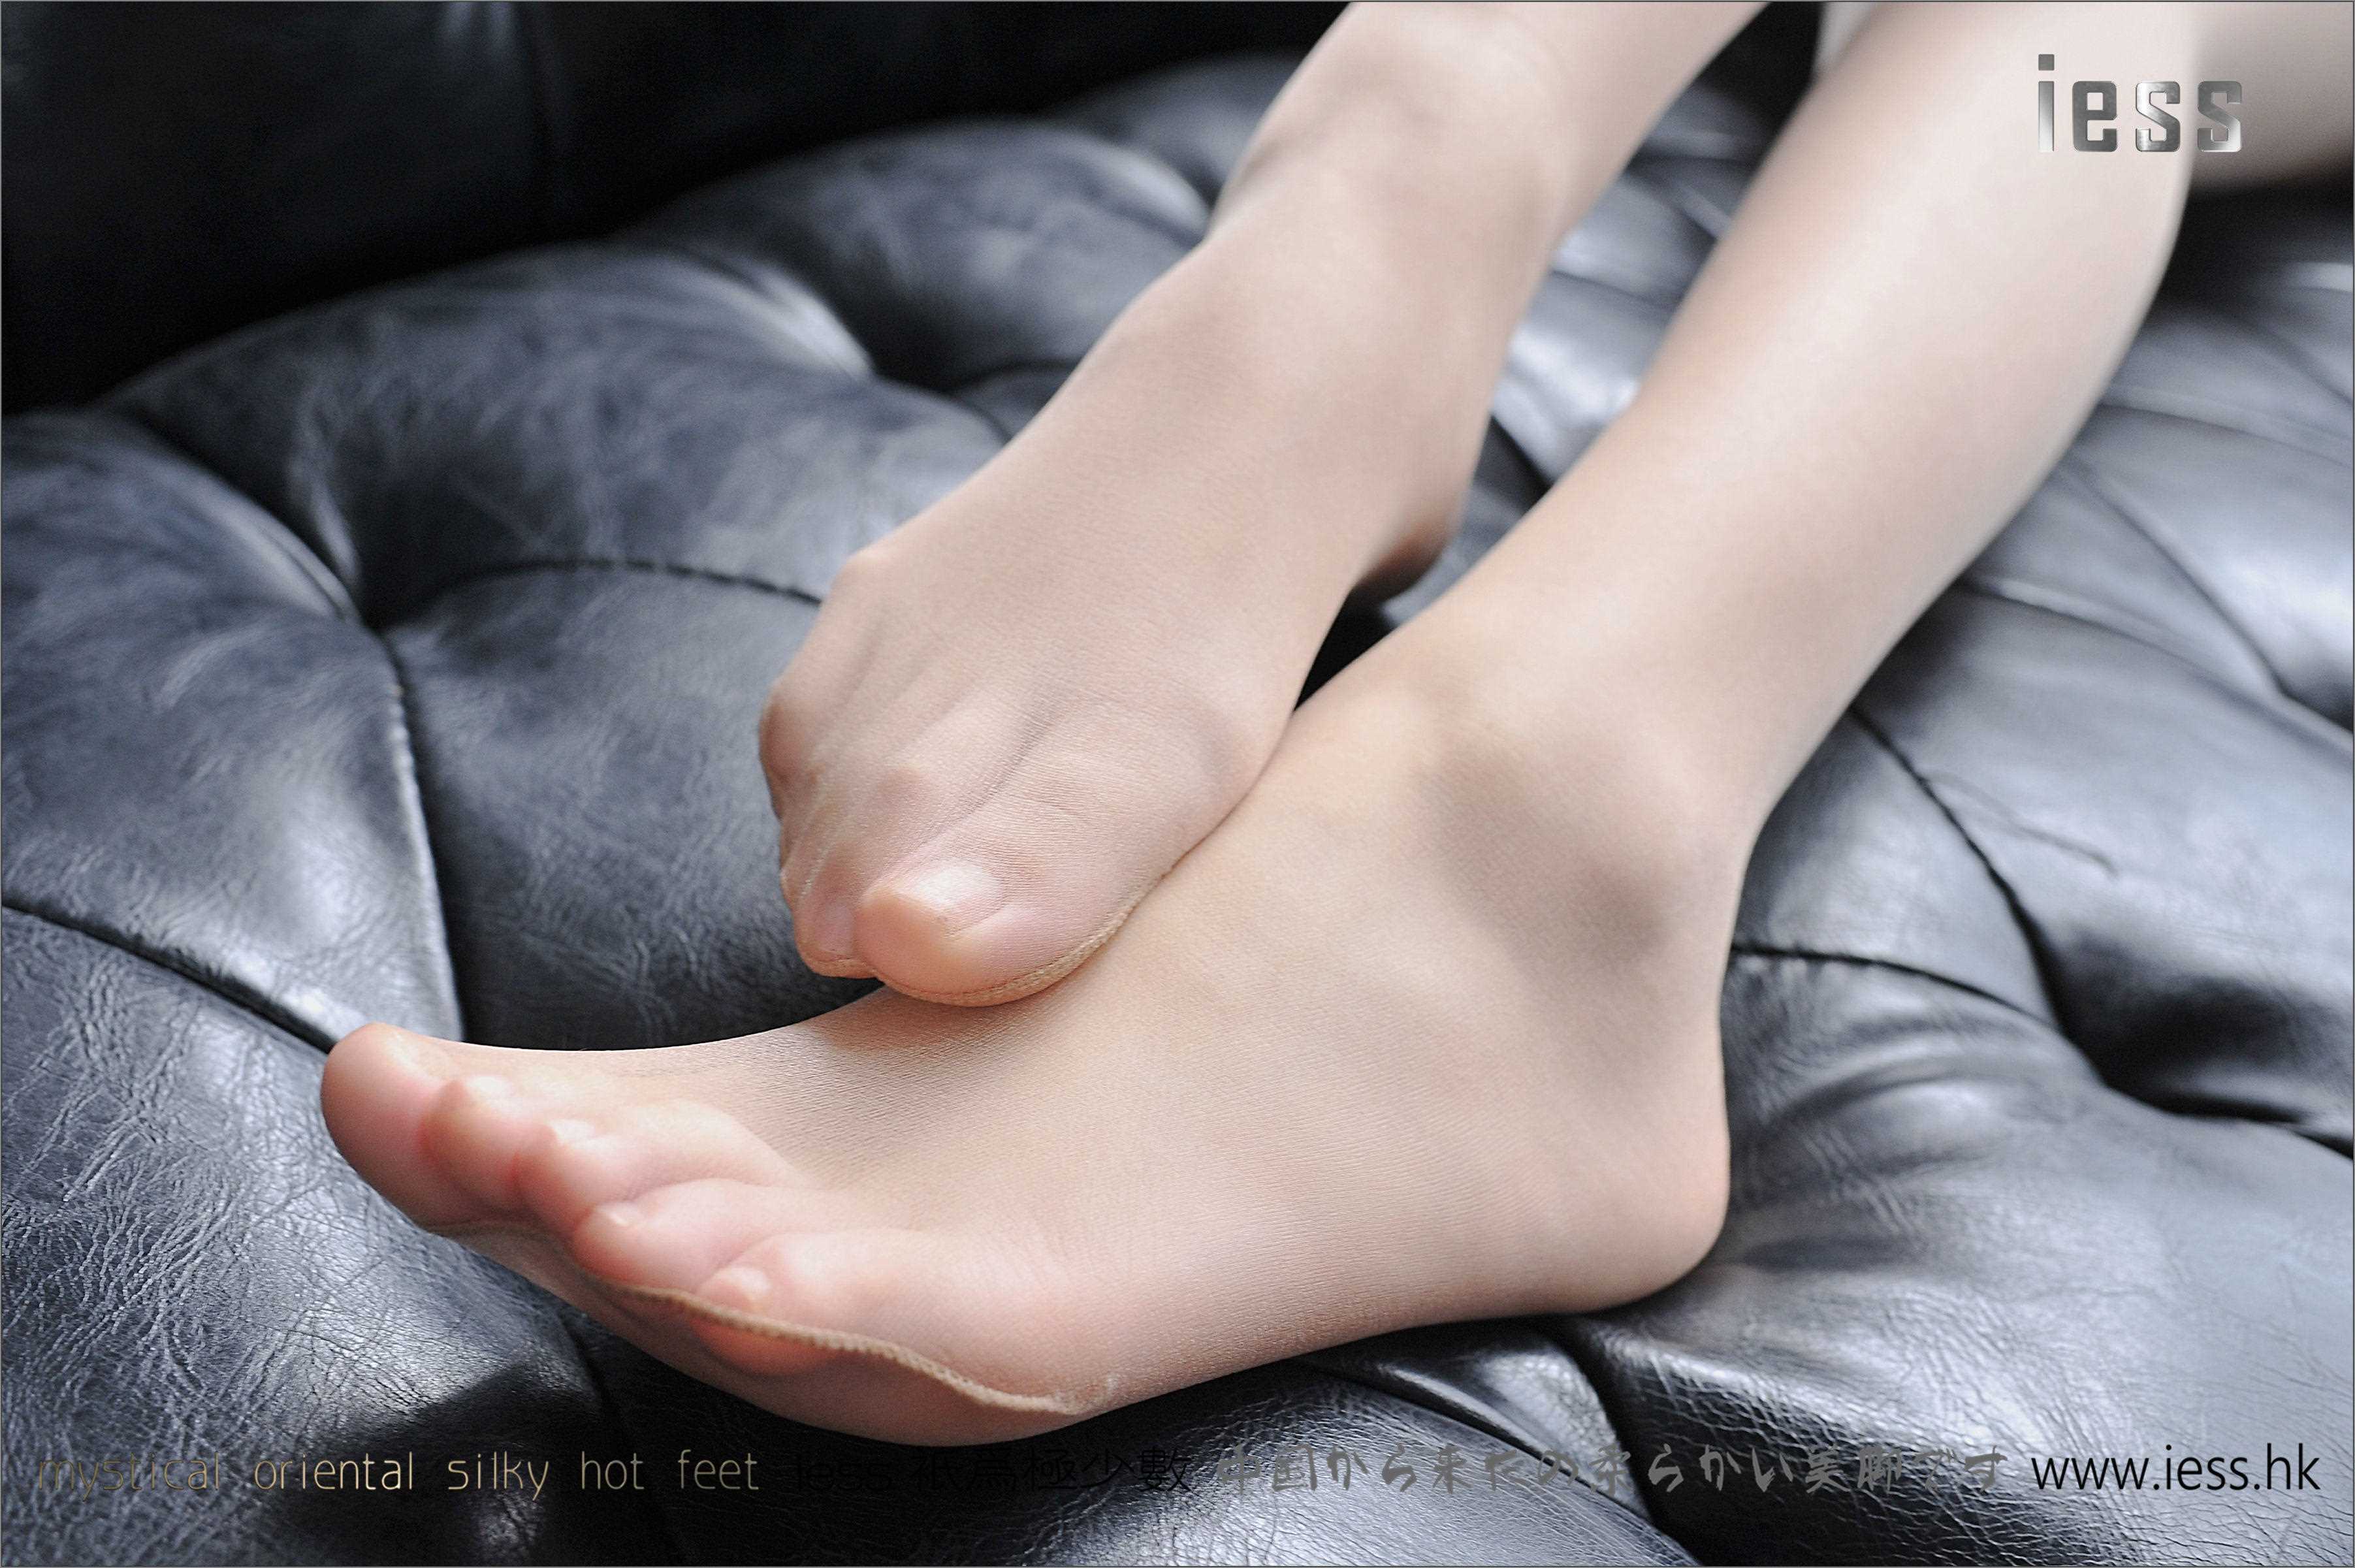 China Beauty Legs and feet 141